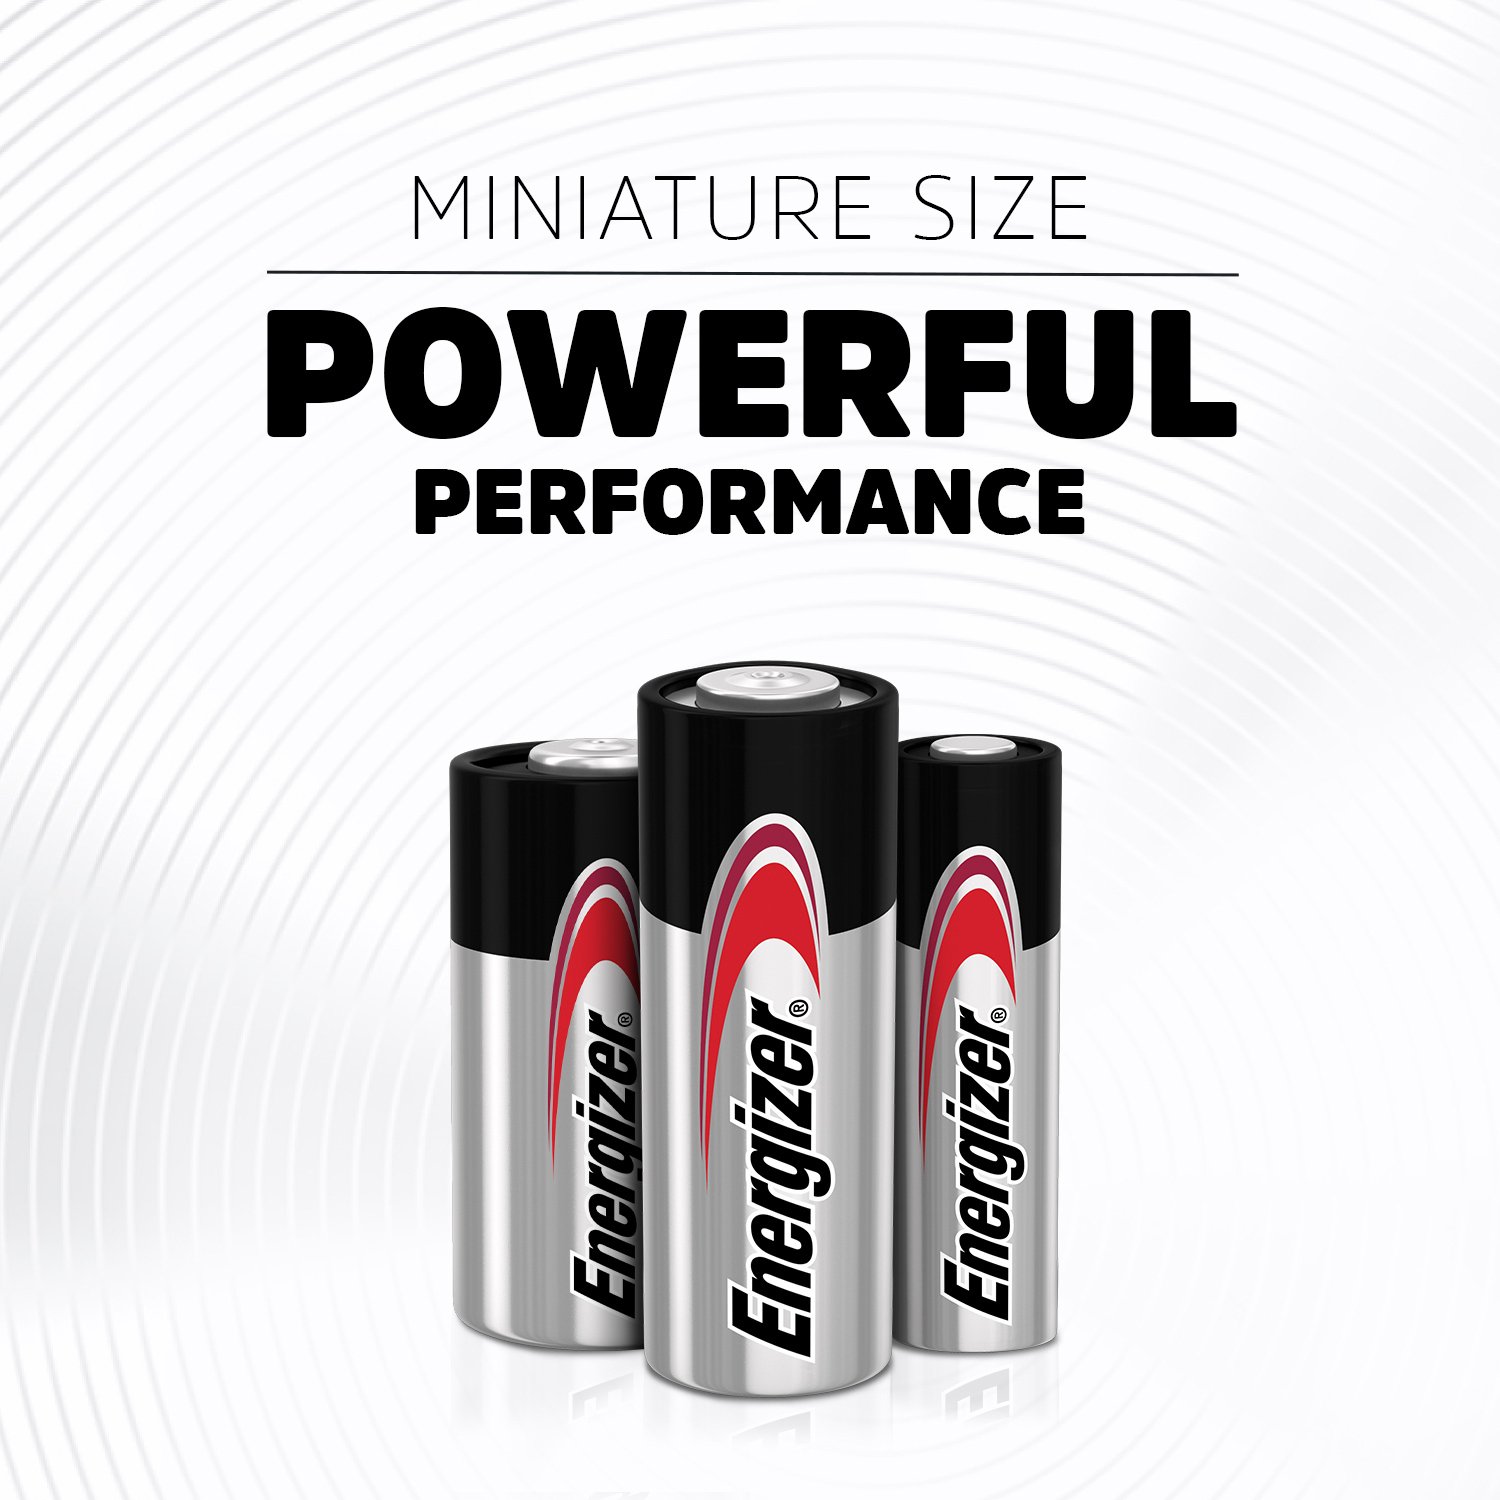 Energizer A23/E23A Batteries Review